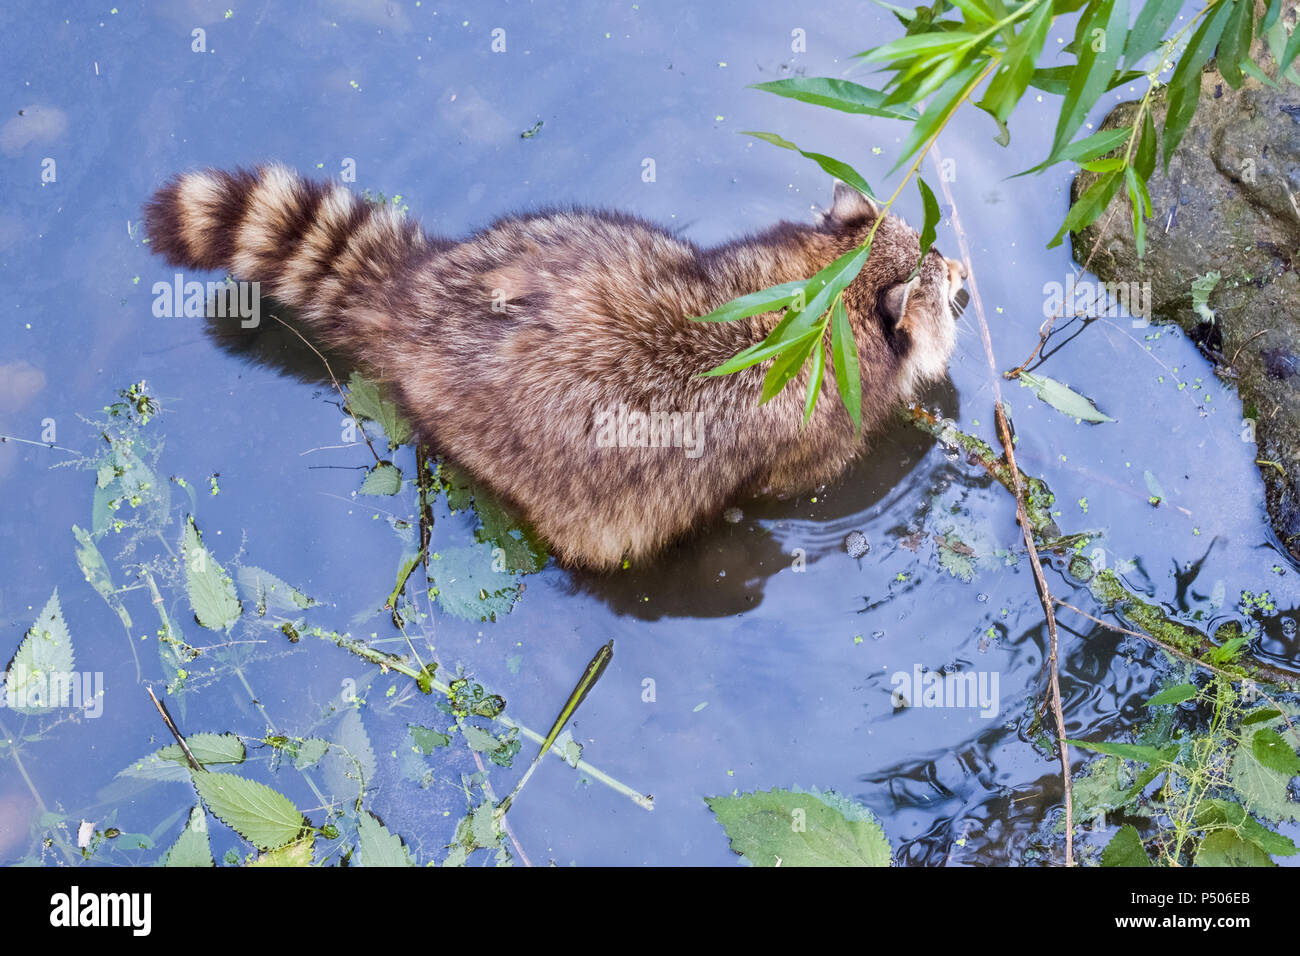 Raccoon in acqua, parco zoo di Gaia, Kerkrade, Paesi Bassi. Foto Stock